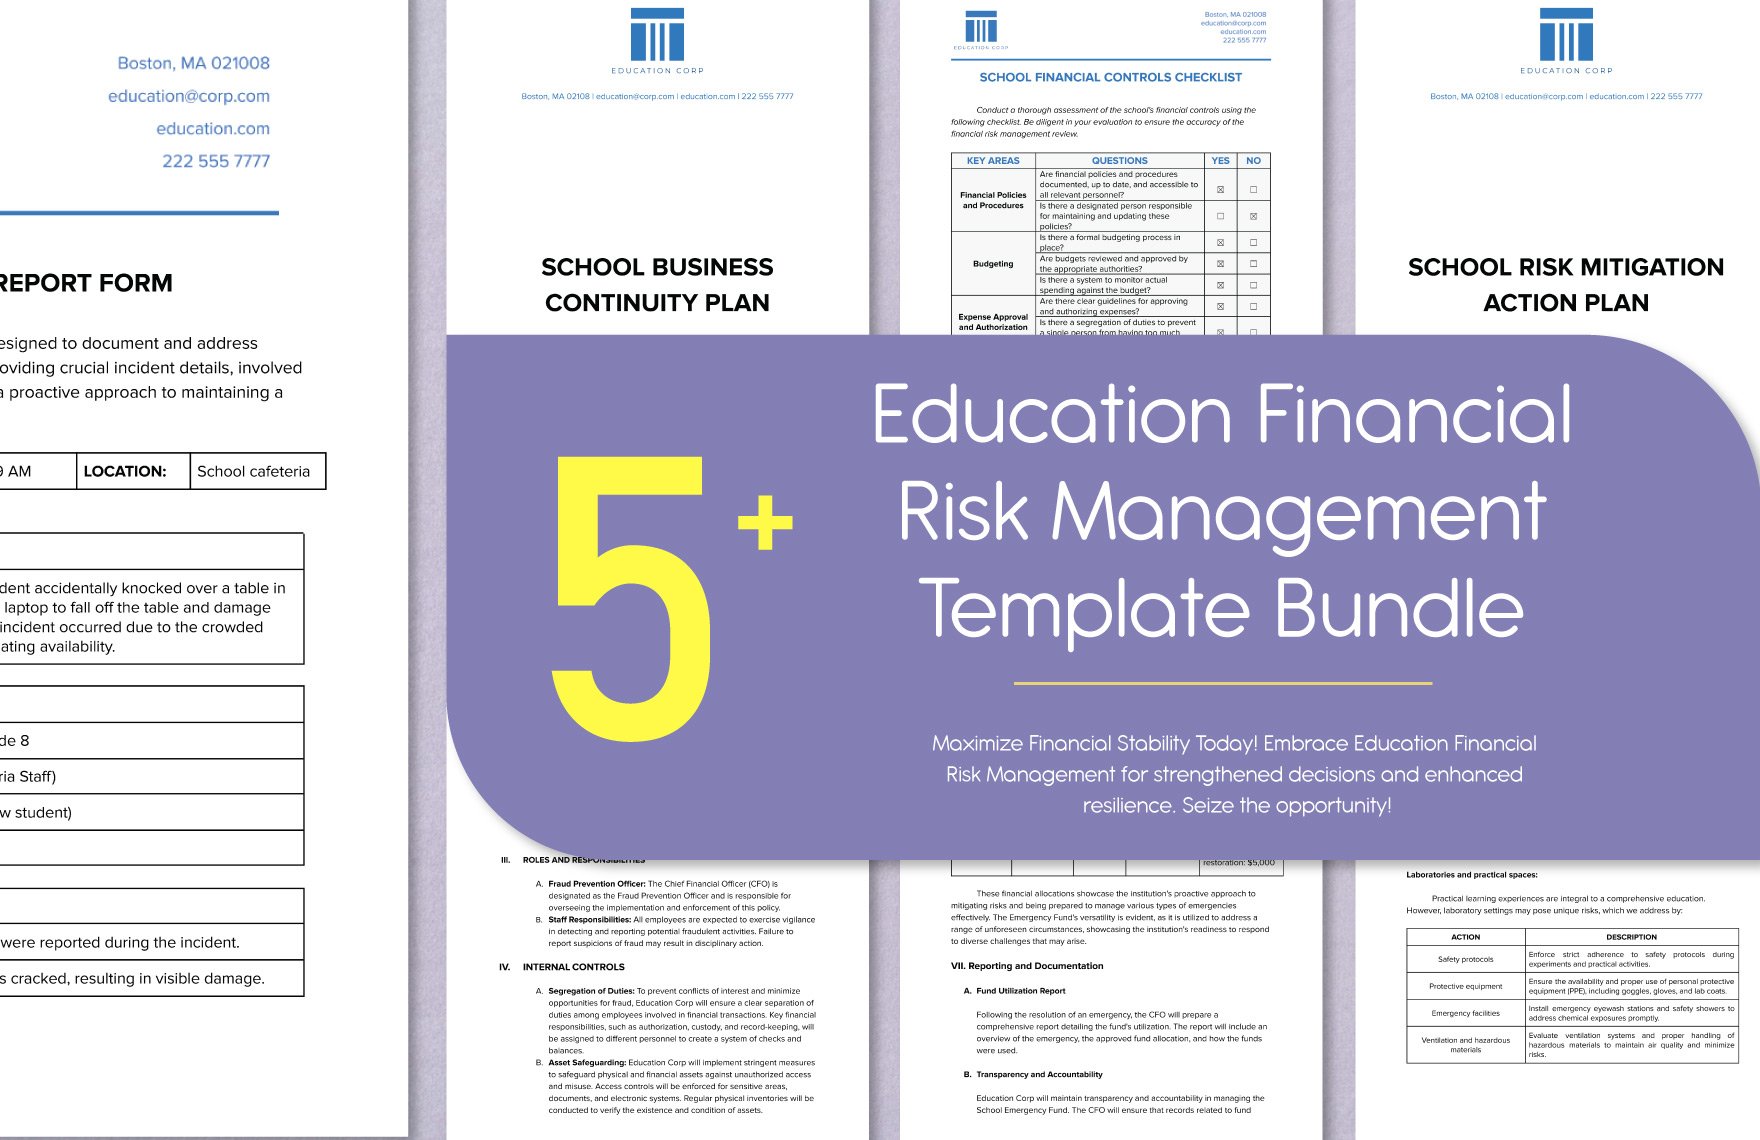 5+ Education Financial Risk Management Template Bundle in Word, Google Docs, PDF